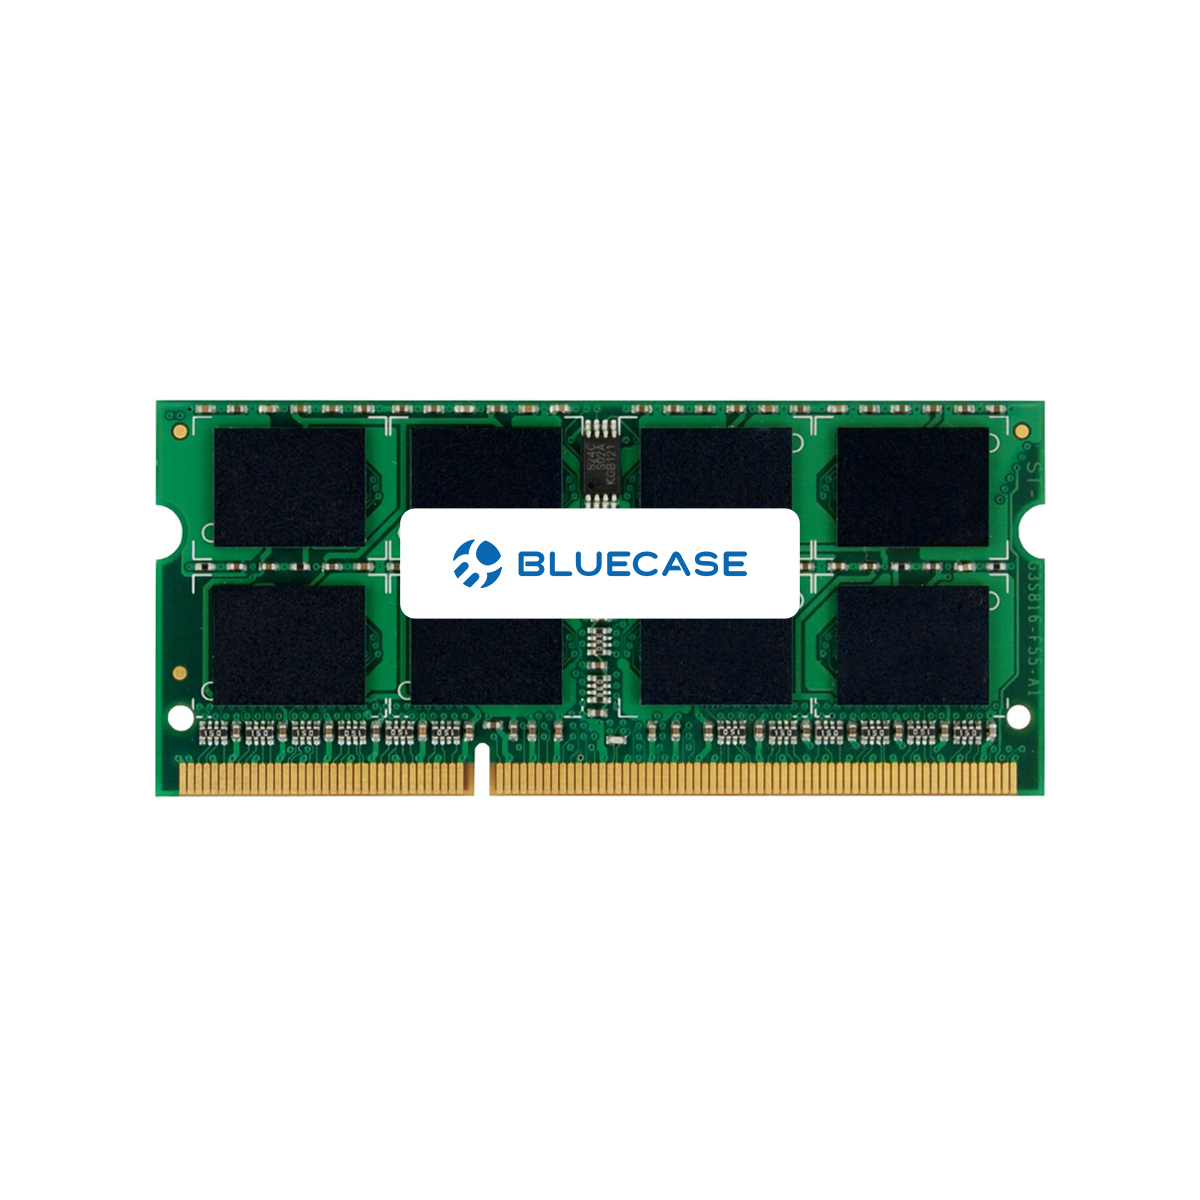 MEMÓRIA RAM DDR3 1333MHz SODIMM LOW VOLTAGE 1,35V BMGSO3D13M135VH9/8G - 1